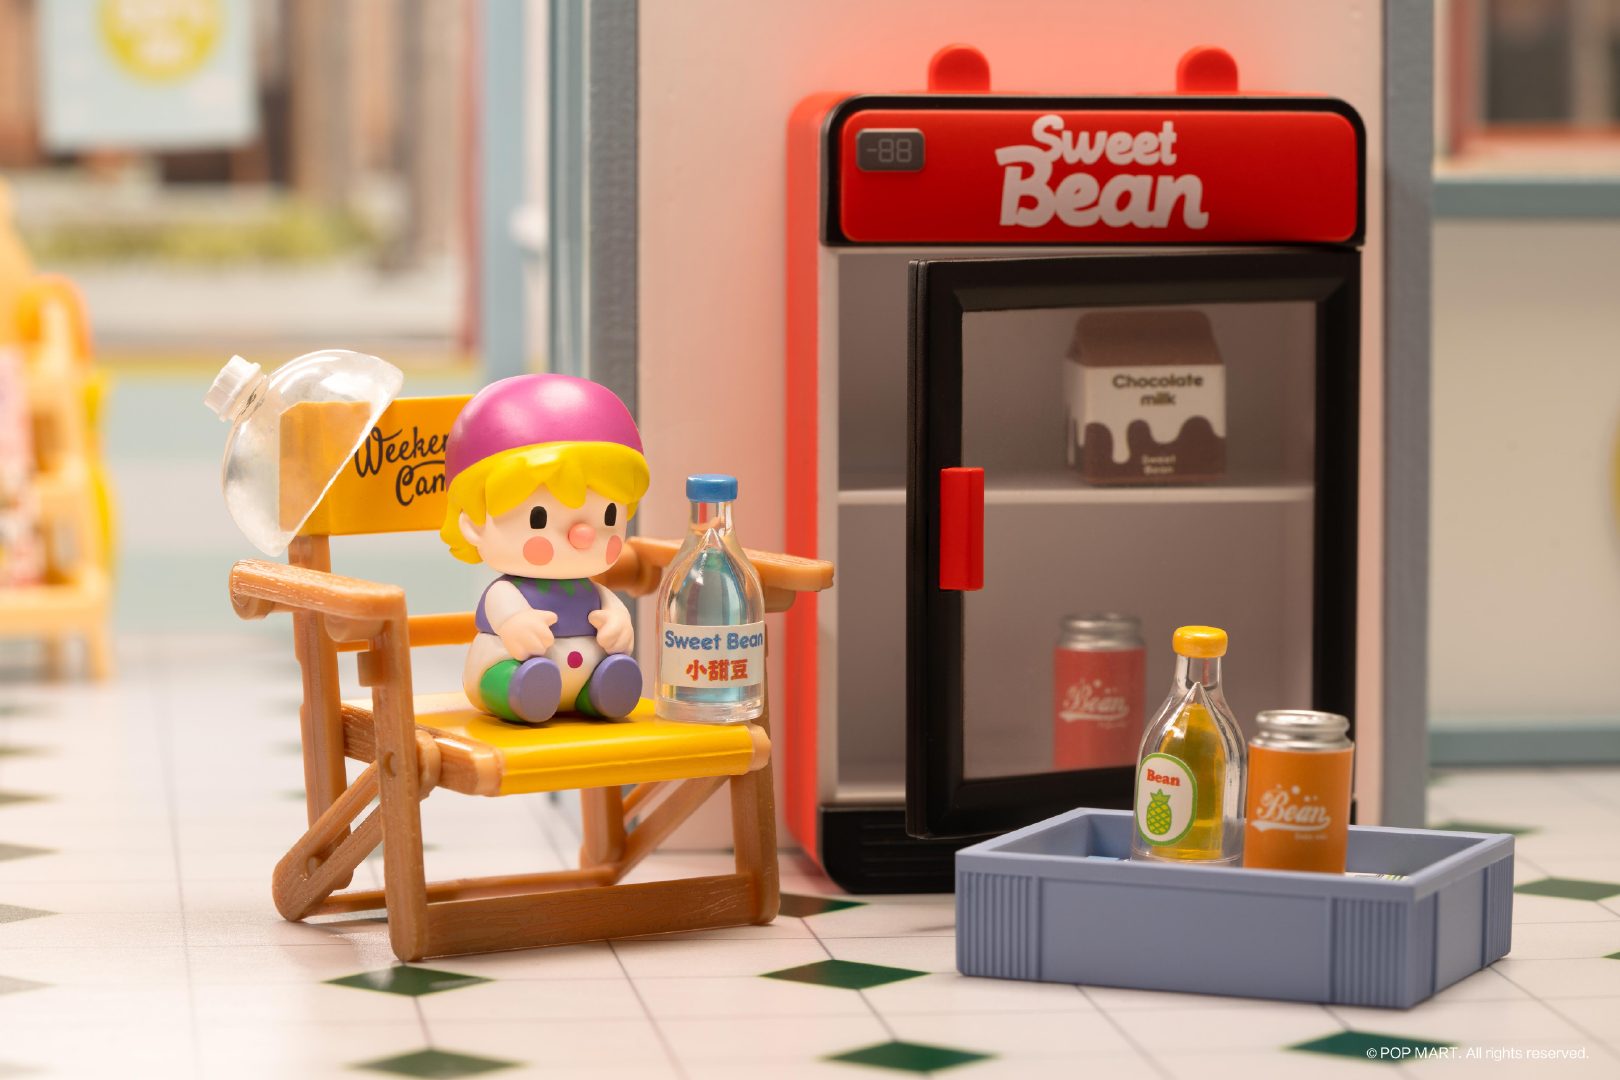 Sweet Bean 24-Hour Convenience Store Series Prop